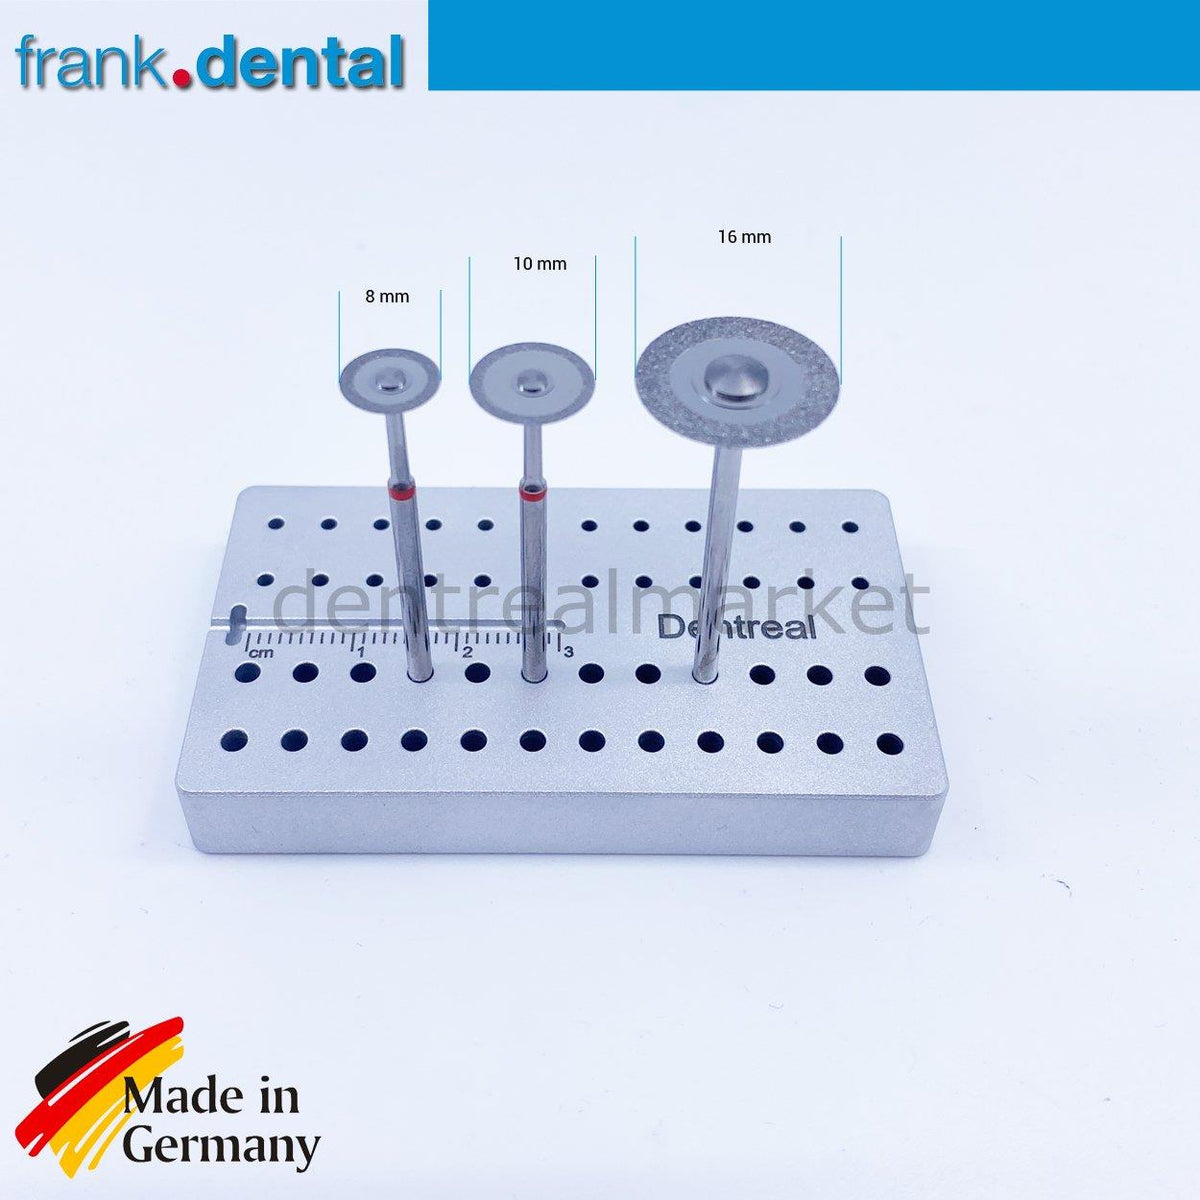 DentrealStore - Frank Dental Diamond Coated Surgical Separe Set - Diamond Cutting Disc